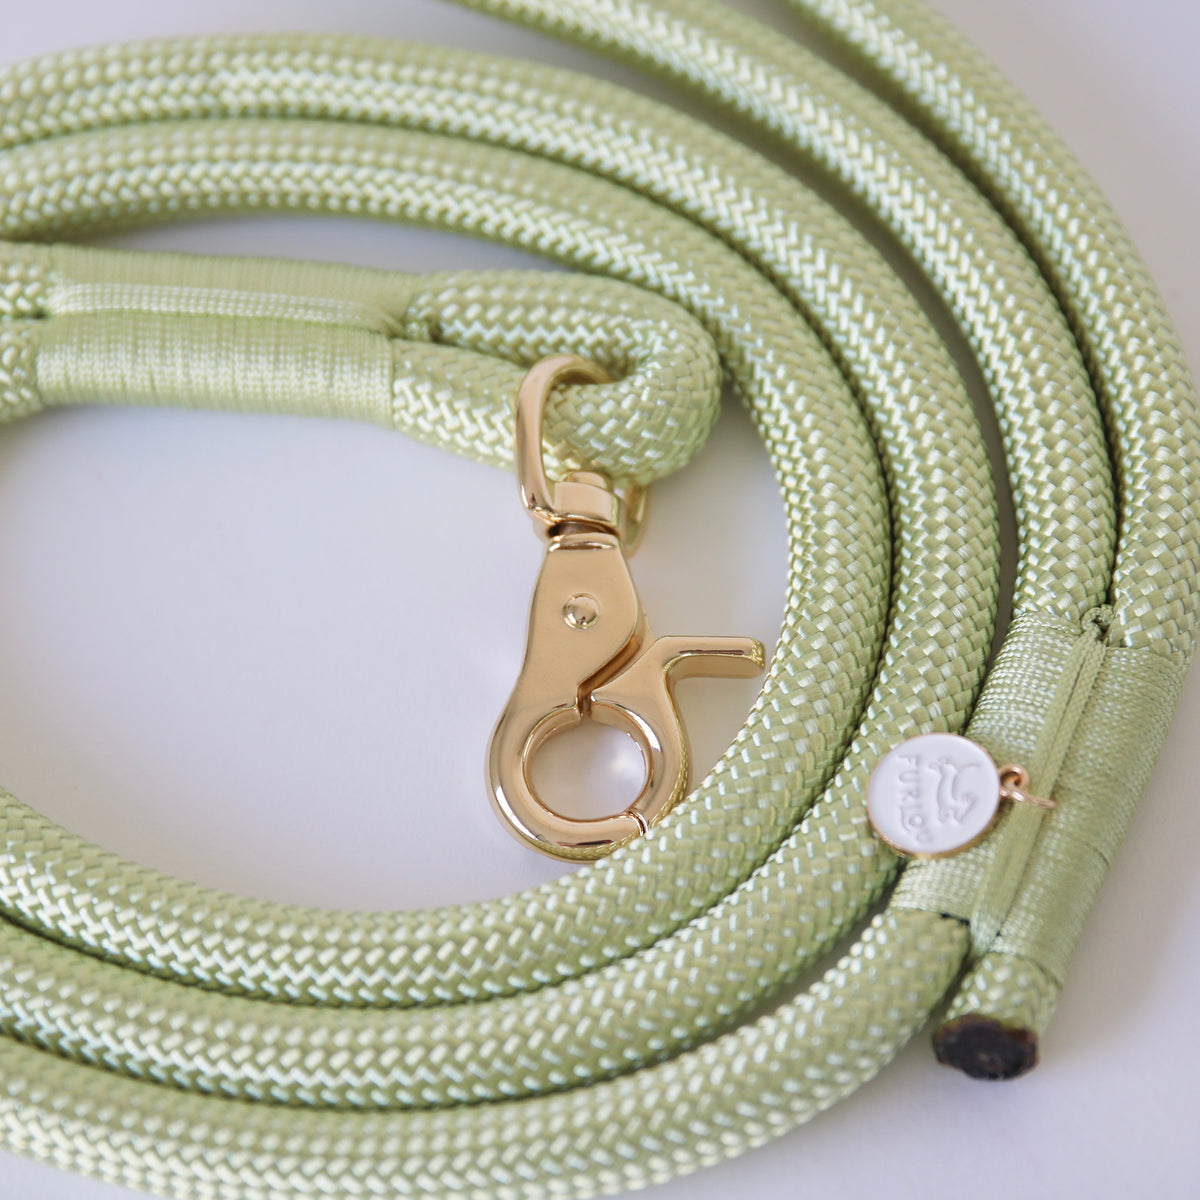 'Lime Green' - Braided Rope Leash - FURLOU 